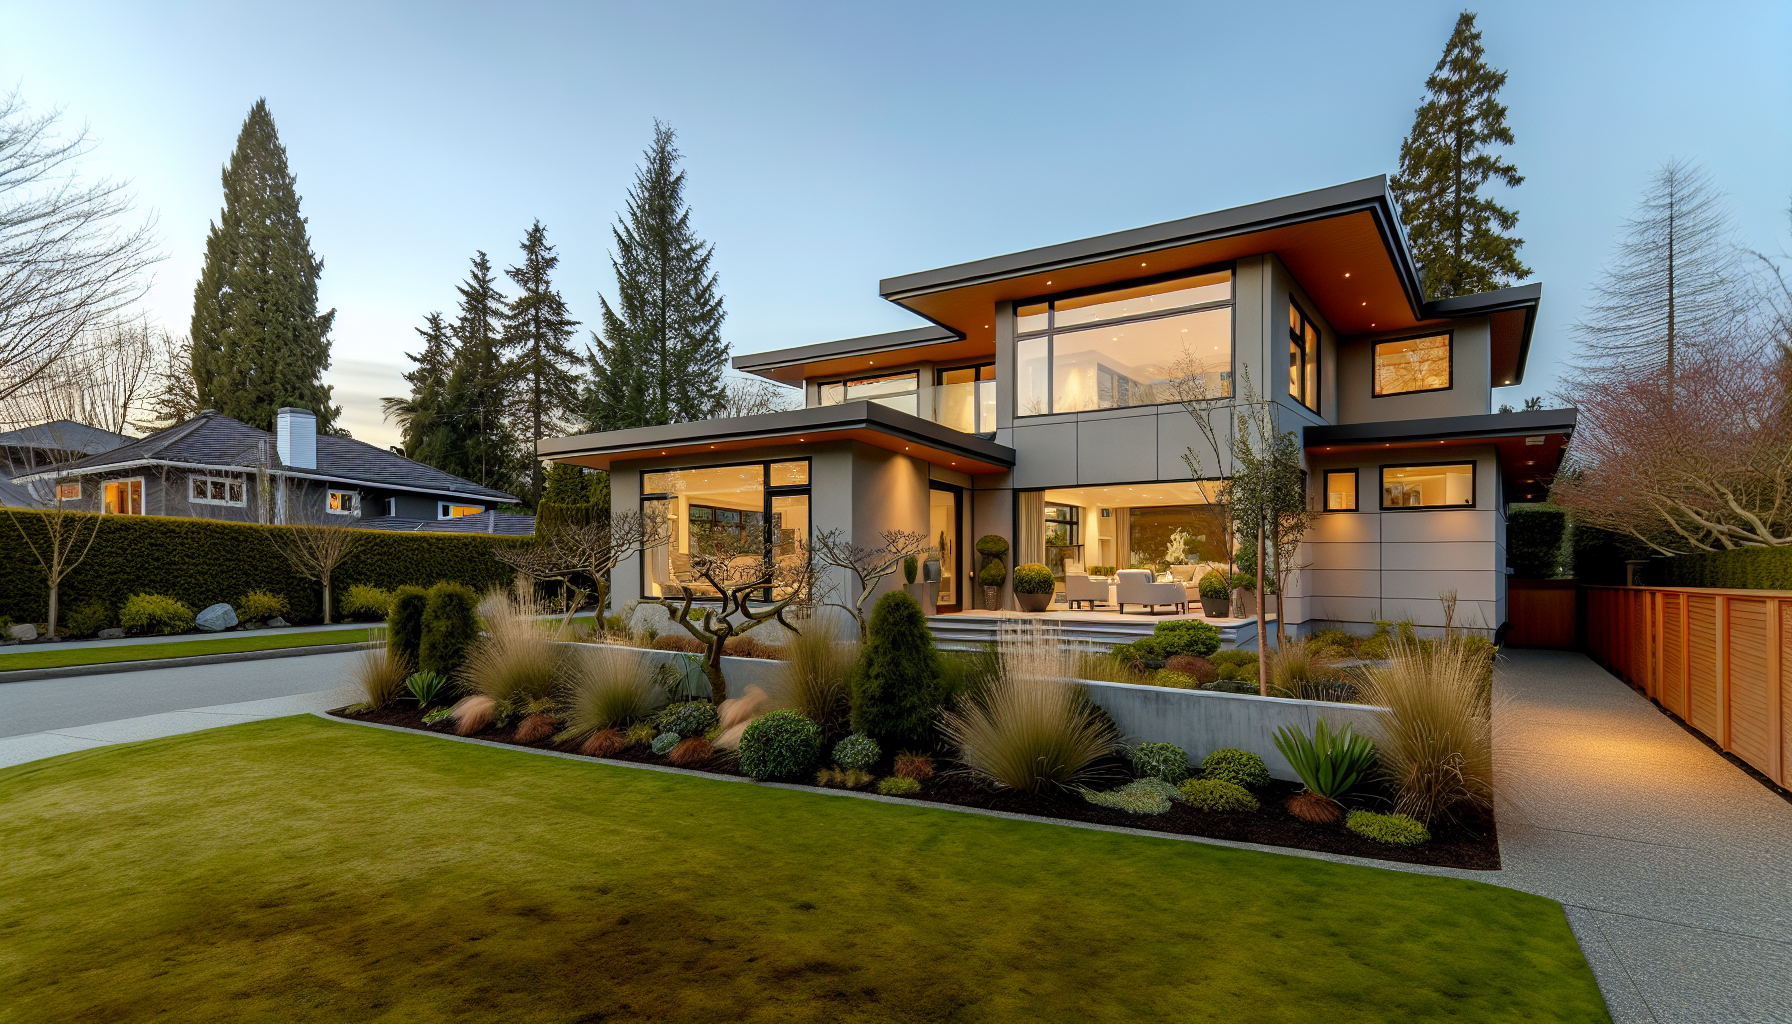 Newly listed modern house with spacious backyard